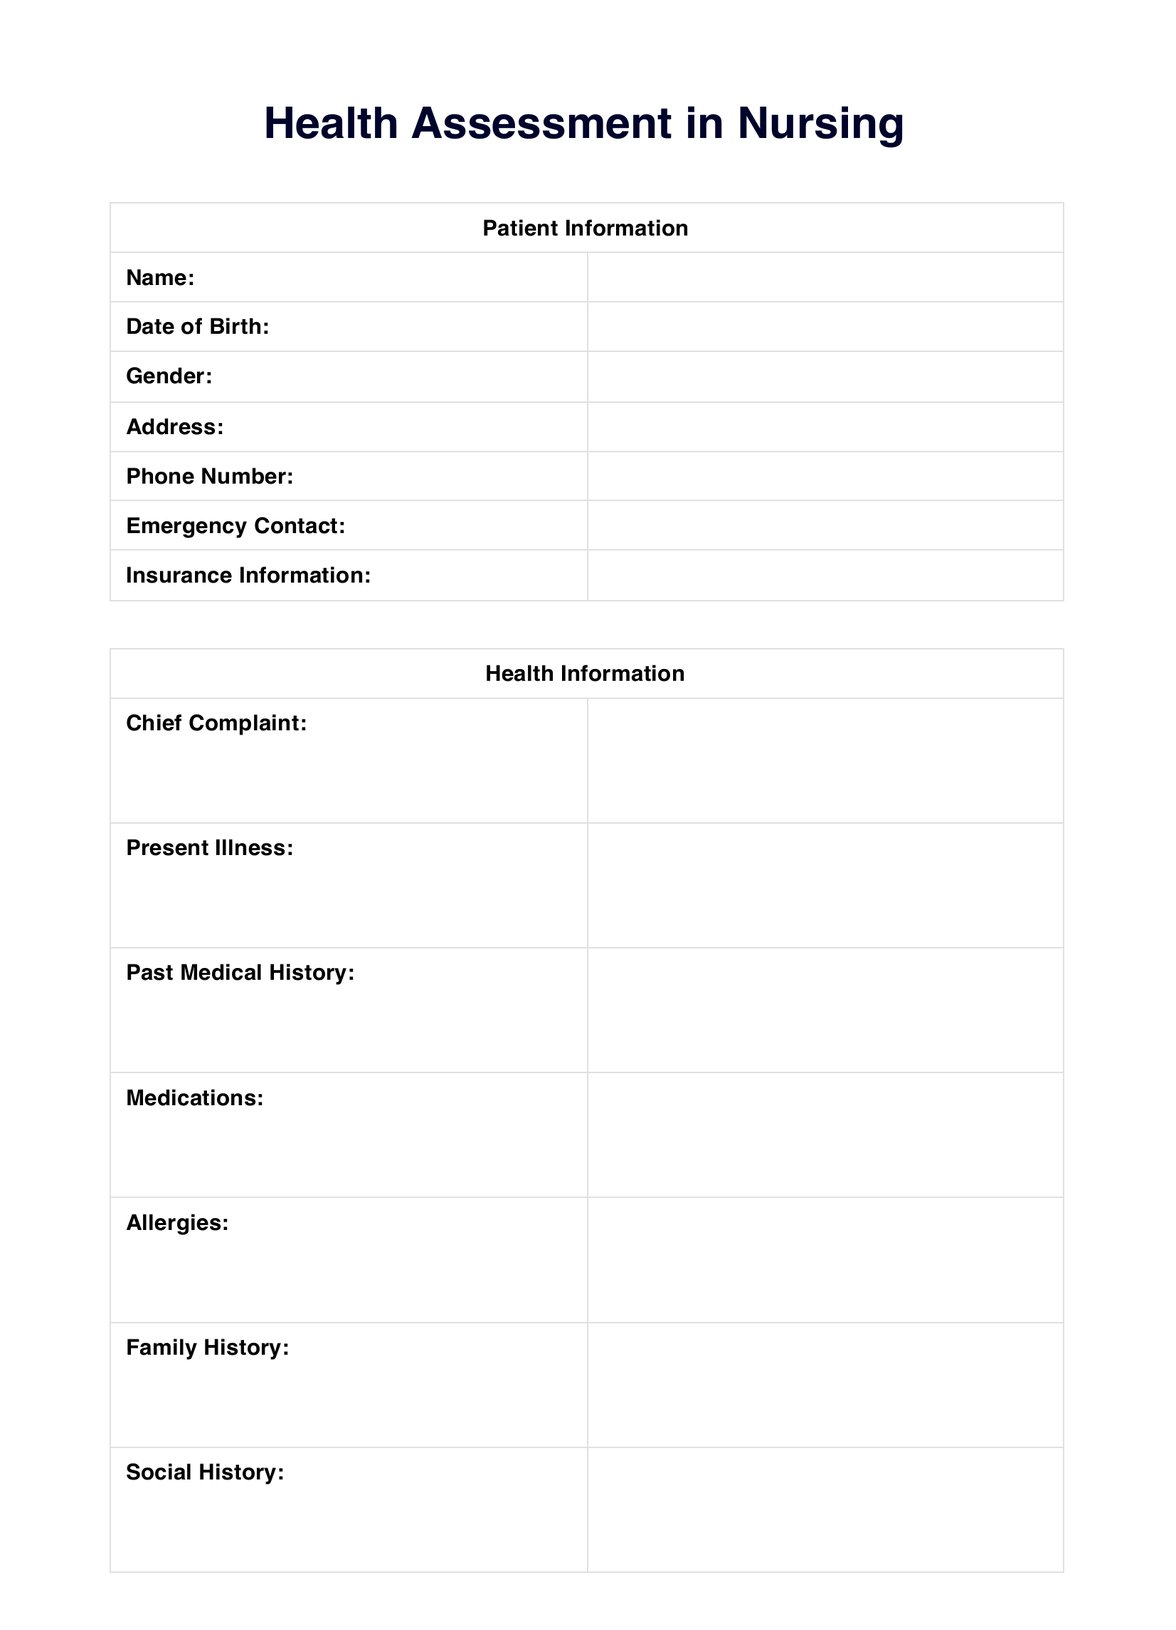 Health Assessment in Nursing PDF Example